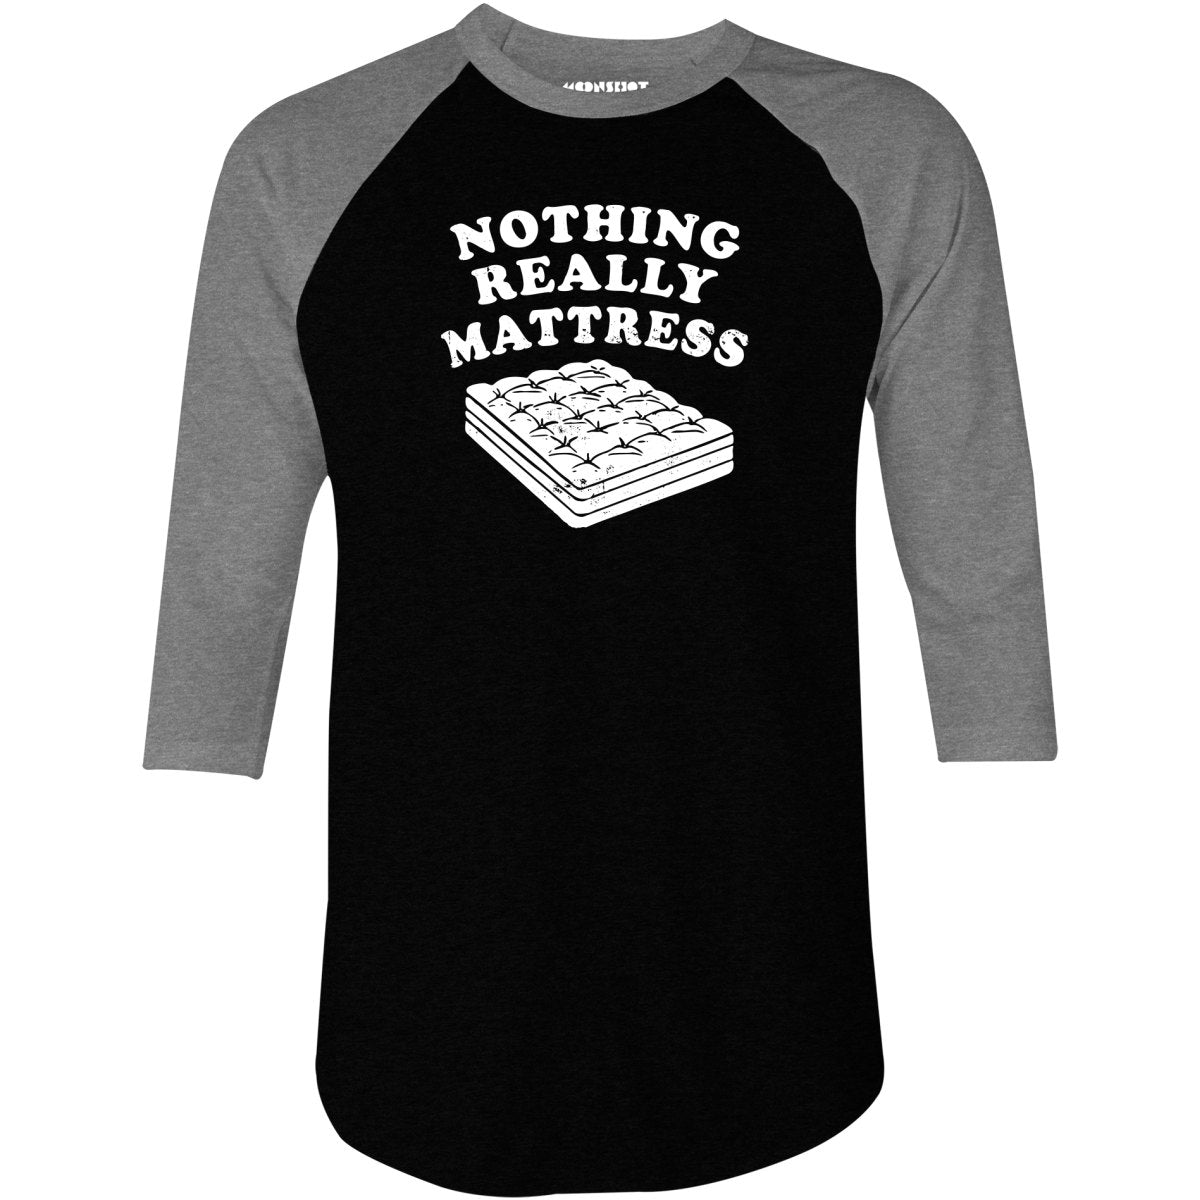 Nothing Really Mattress - 3/4 Sleeve Raglan T-Shirt